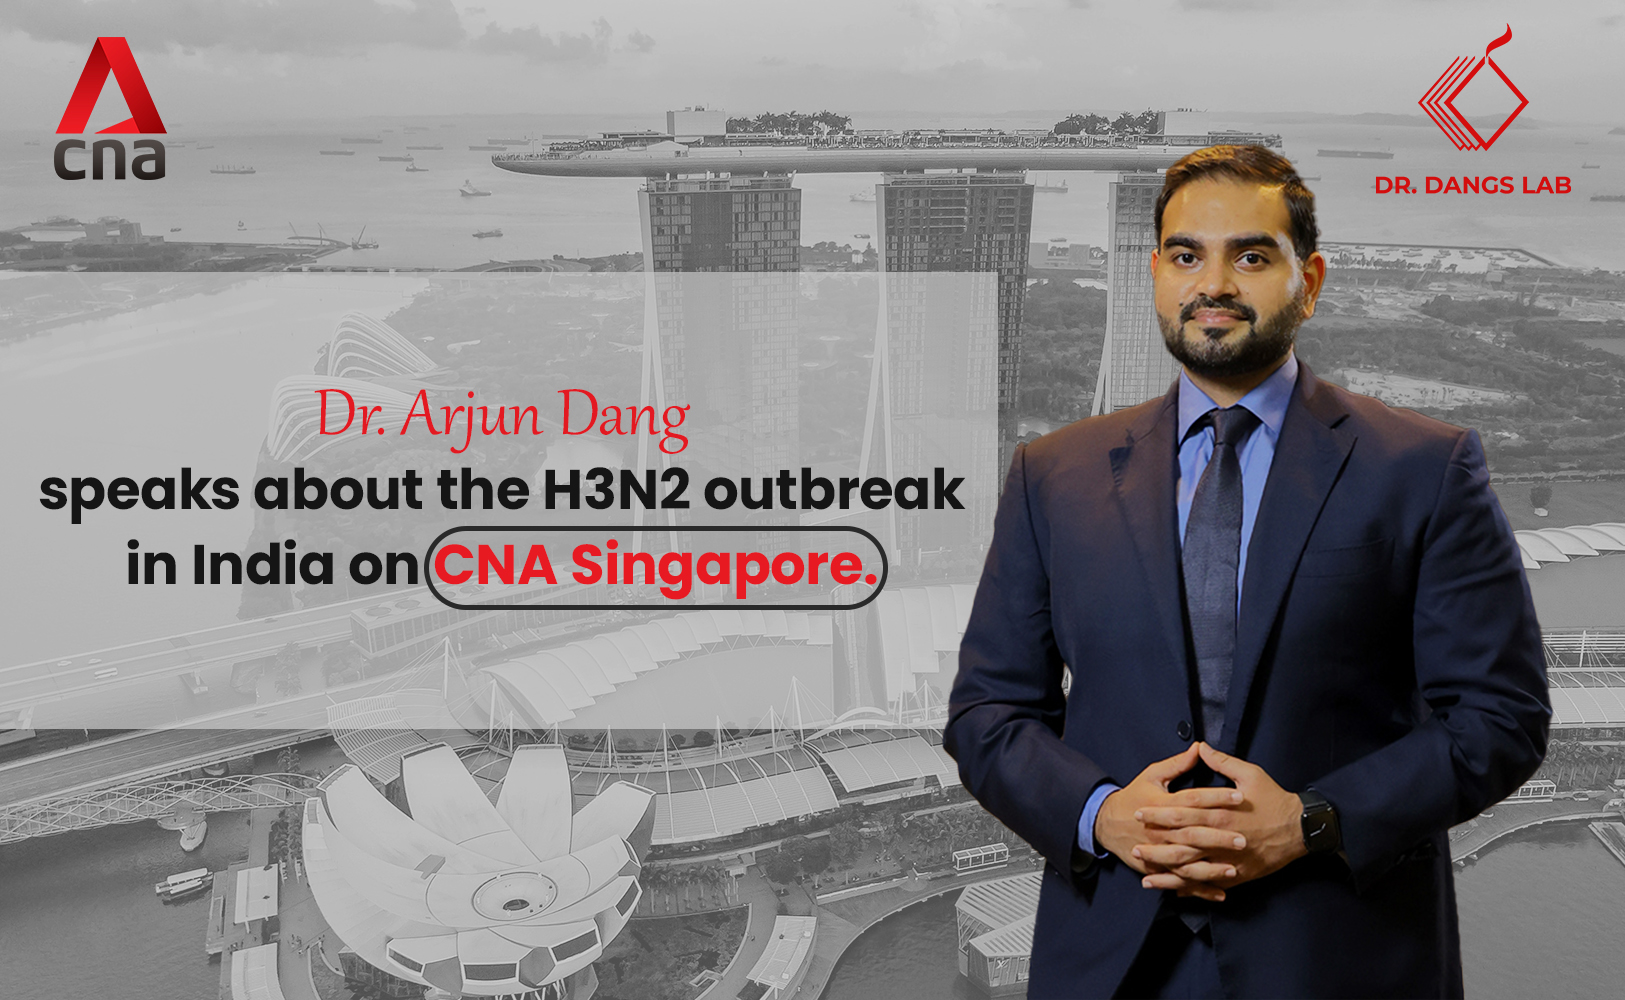 Dr. Arjun Dang about H3N2